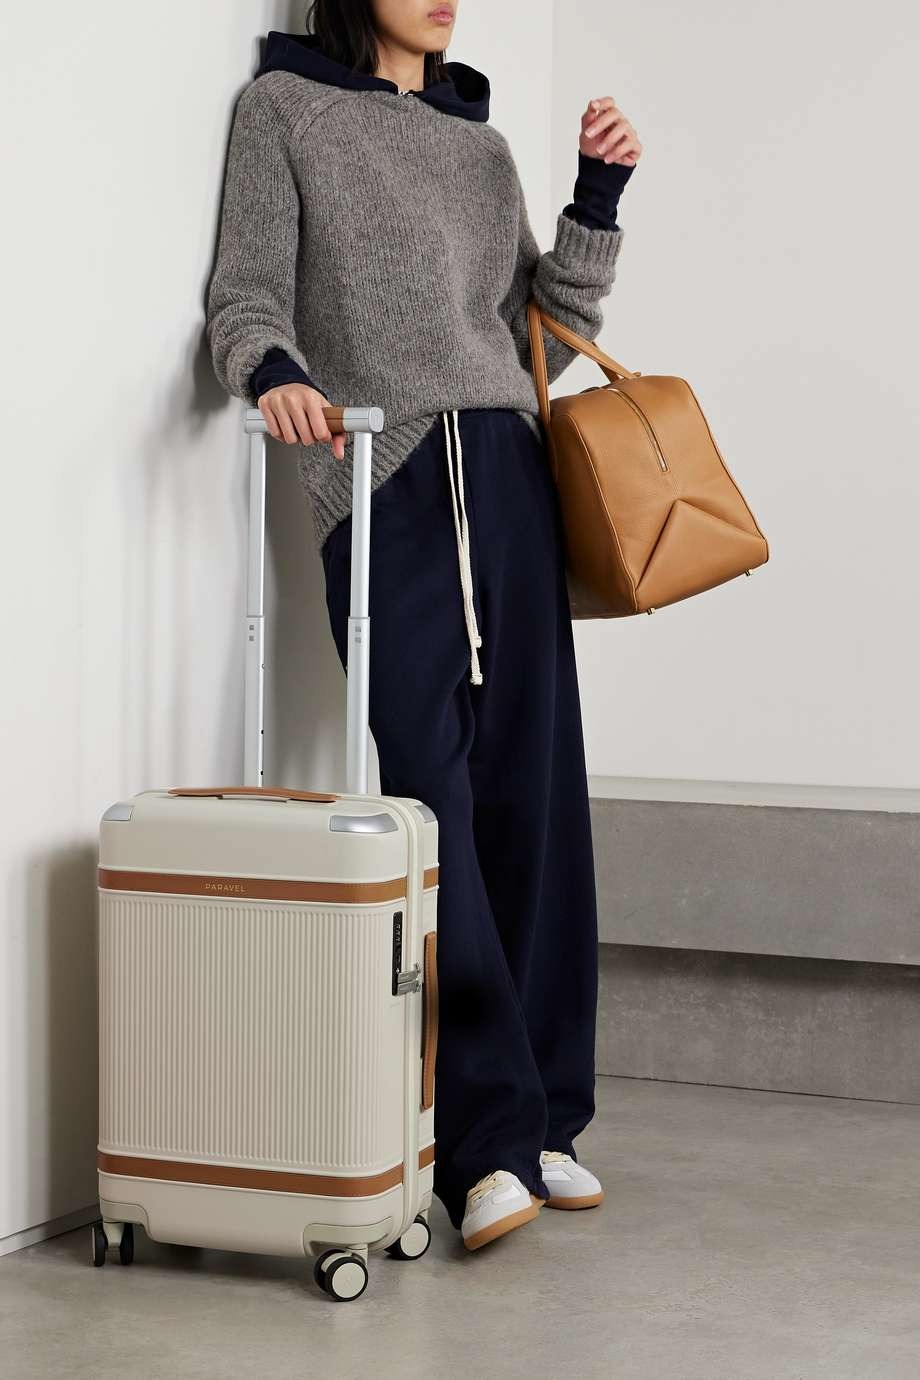 designer luggage sets for women louis vuitton